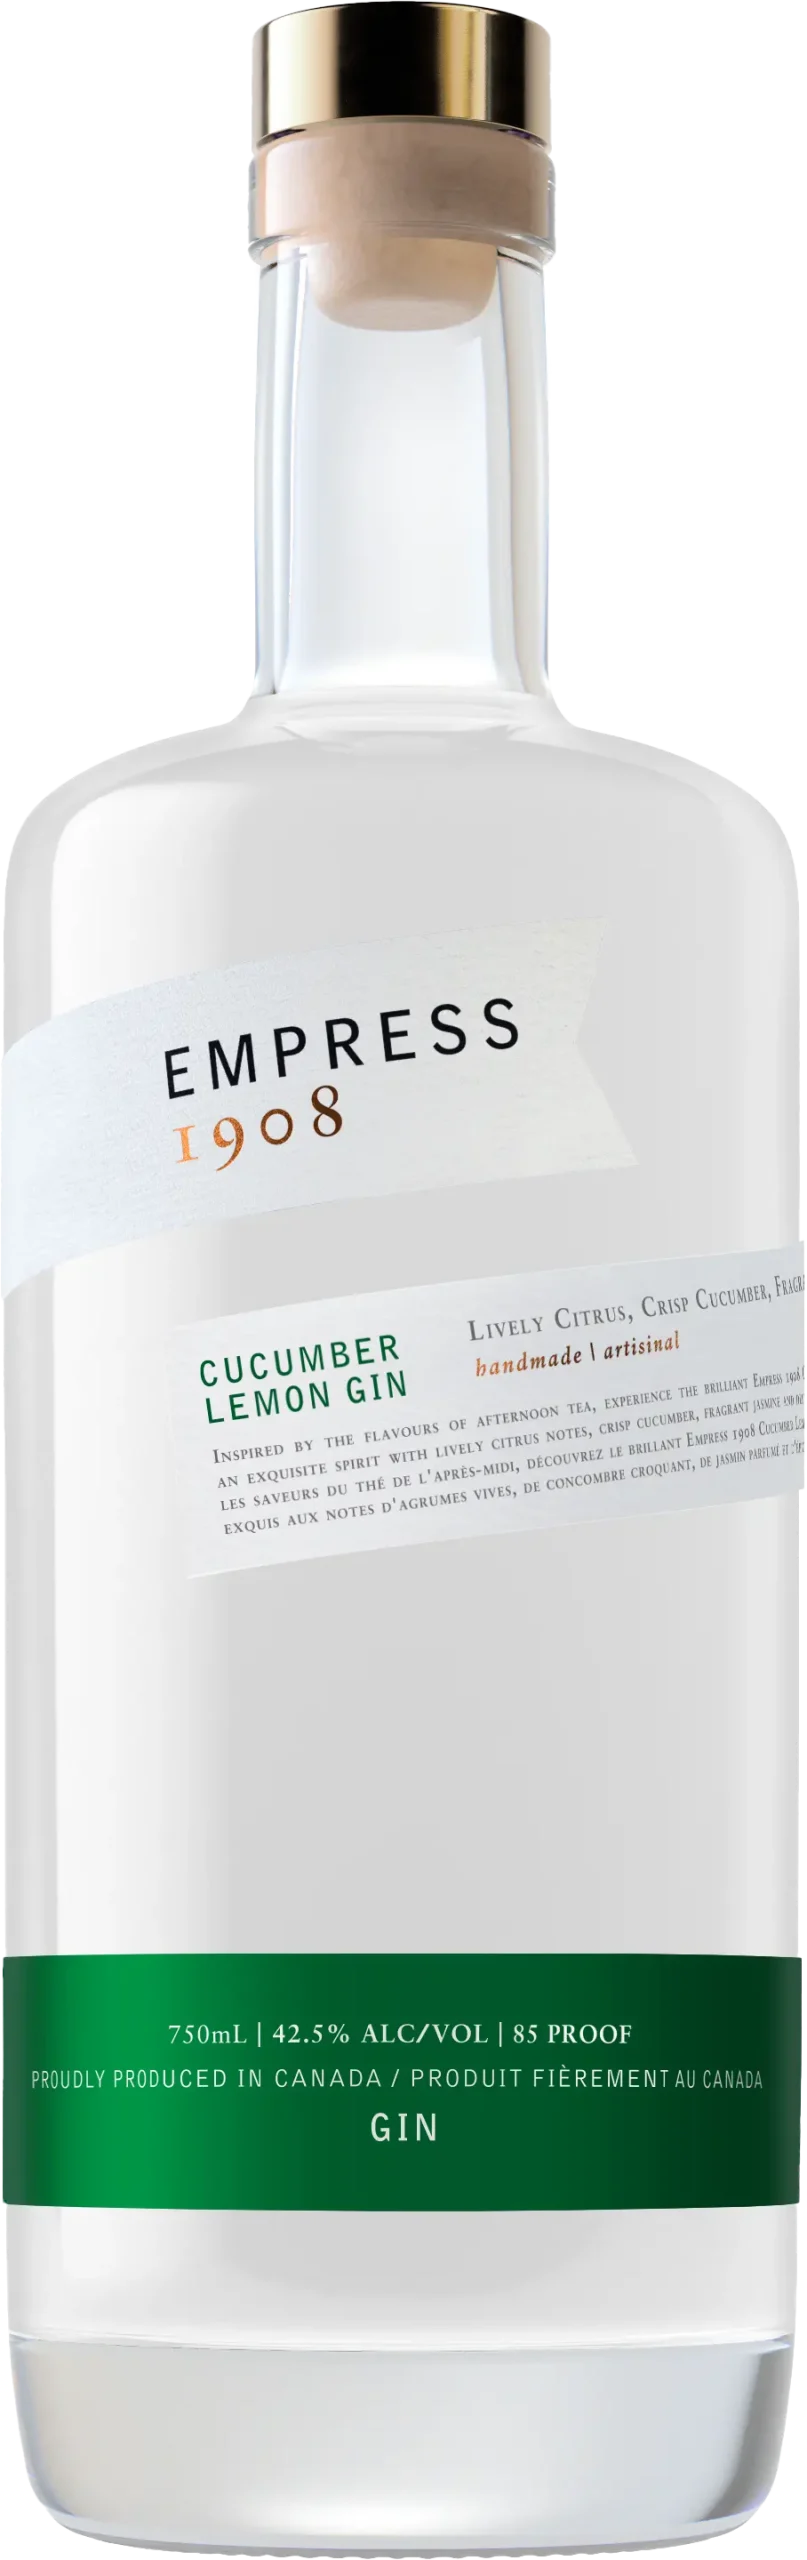 Empress Cucumber Lemon Gin 750ml